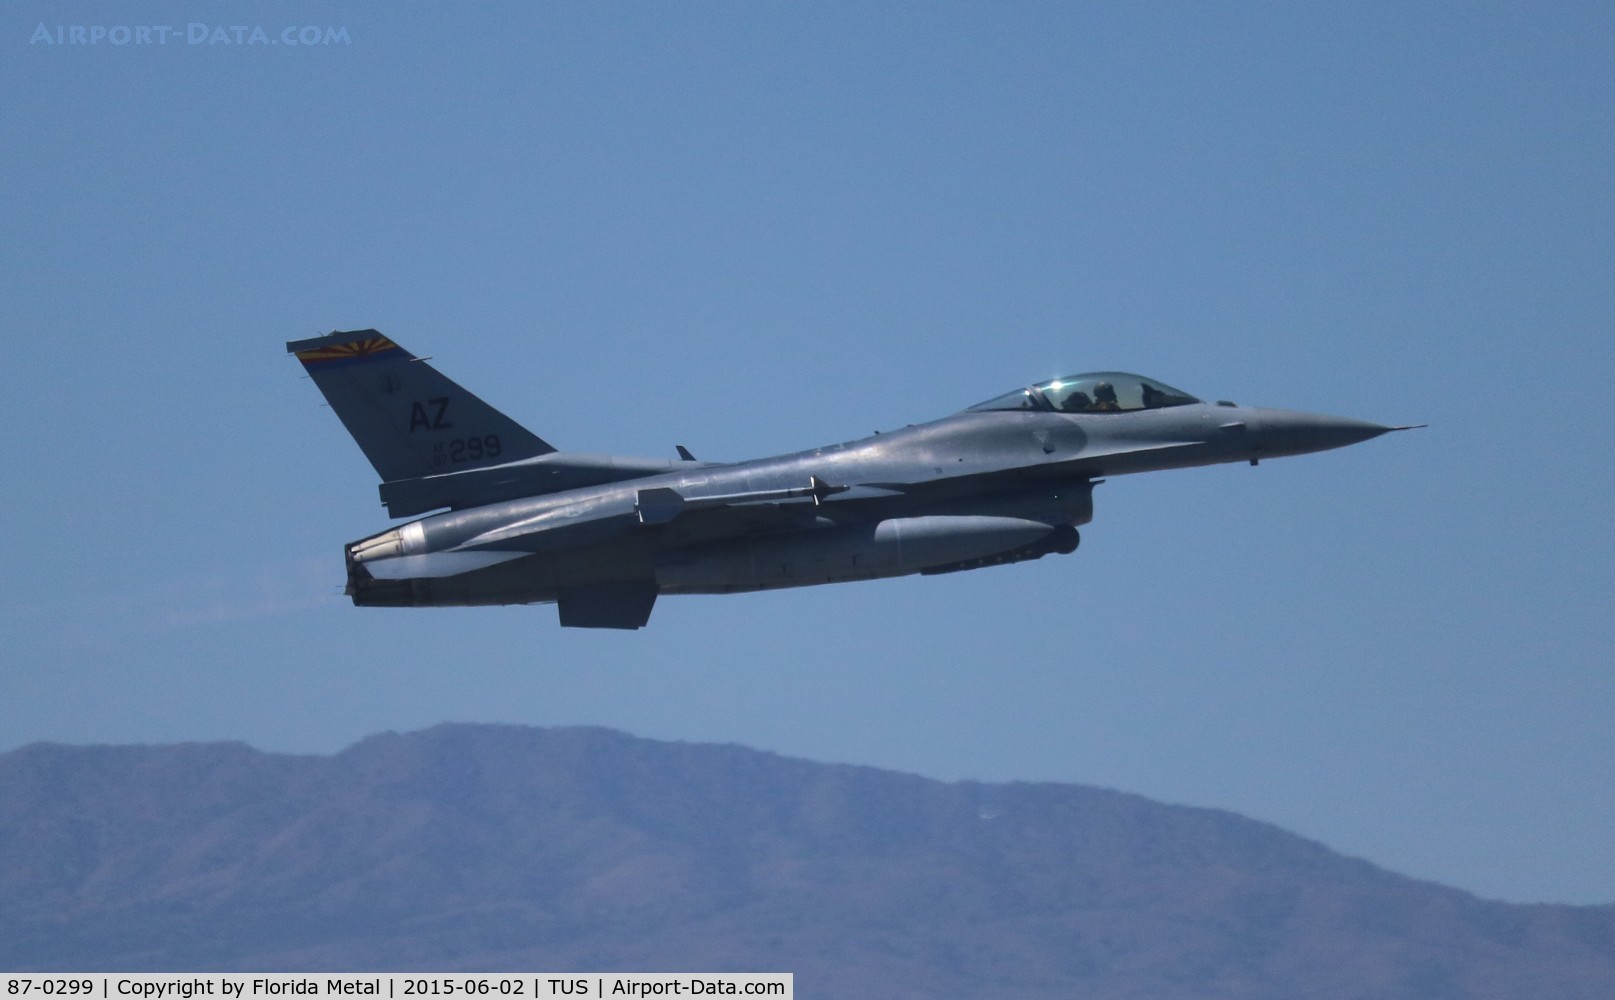 87-0299, 1987 General Dynamics F-16C Fighting Falcon C/N 5C-560, F-16C